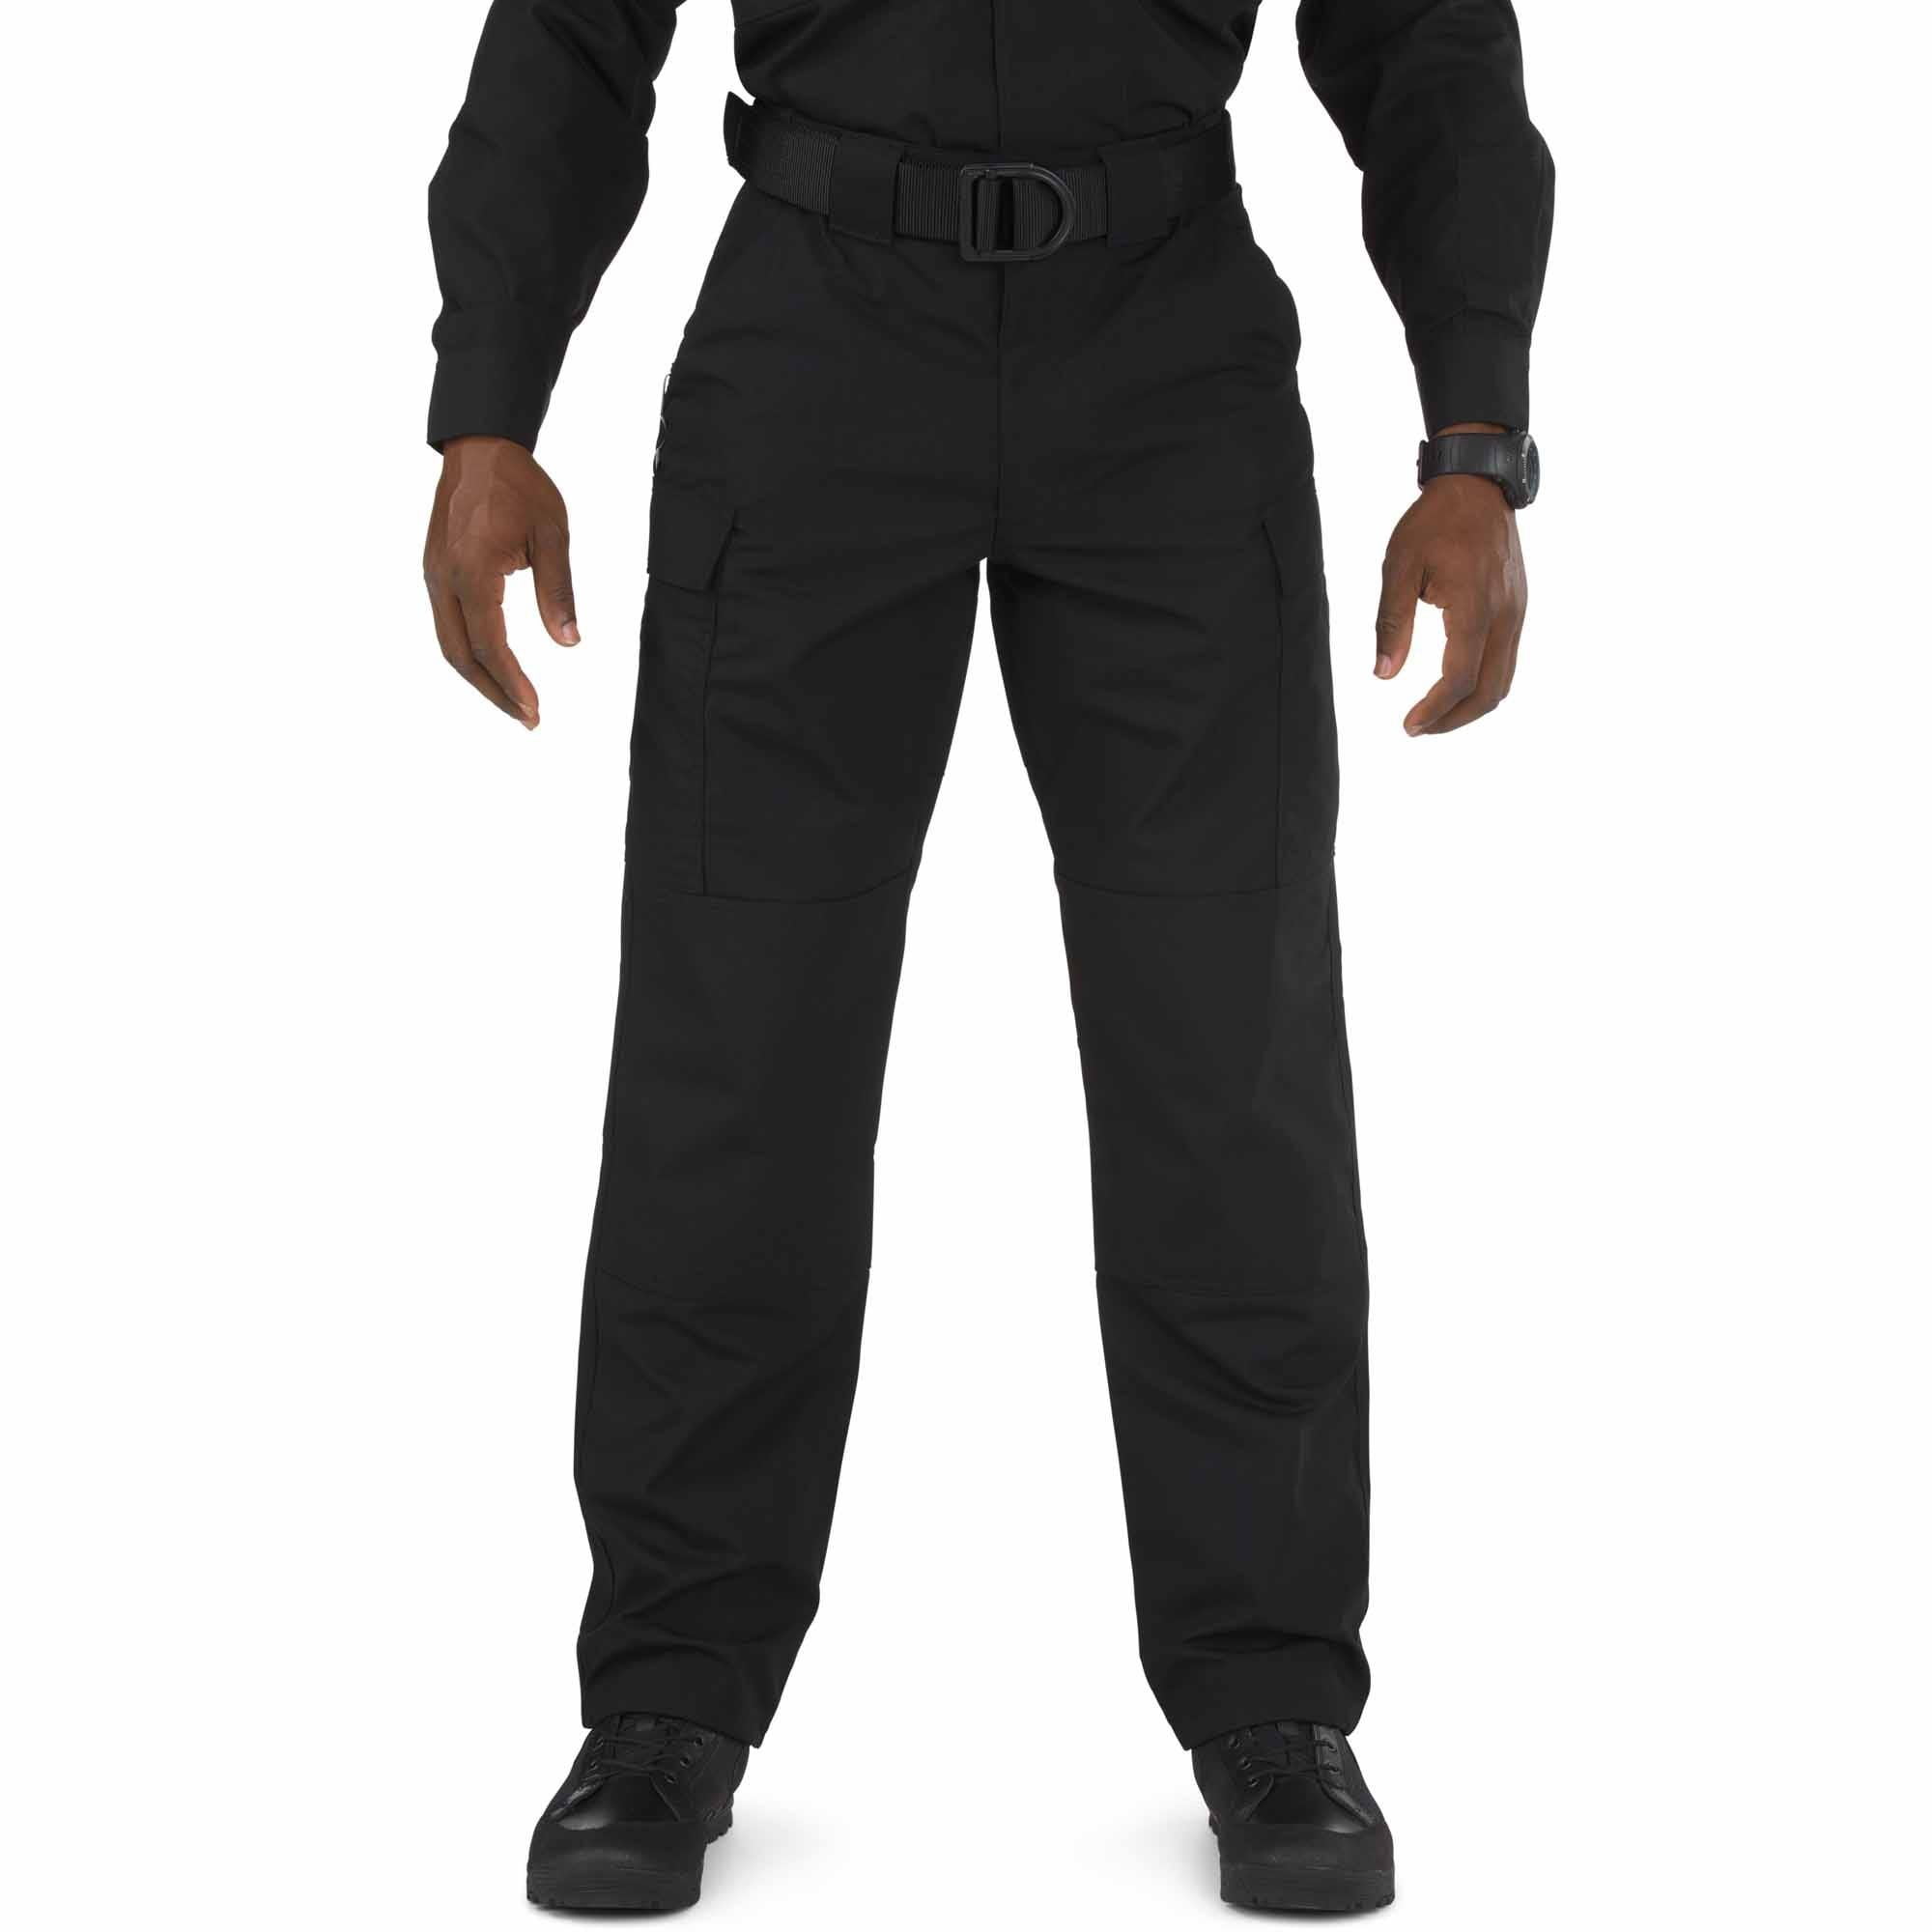 5.11 Work Gear Men's Taclite TDU Professional Work Pants